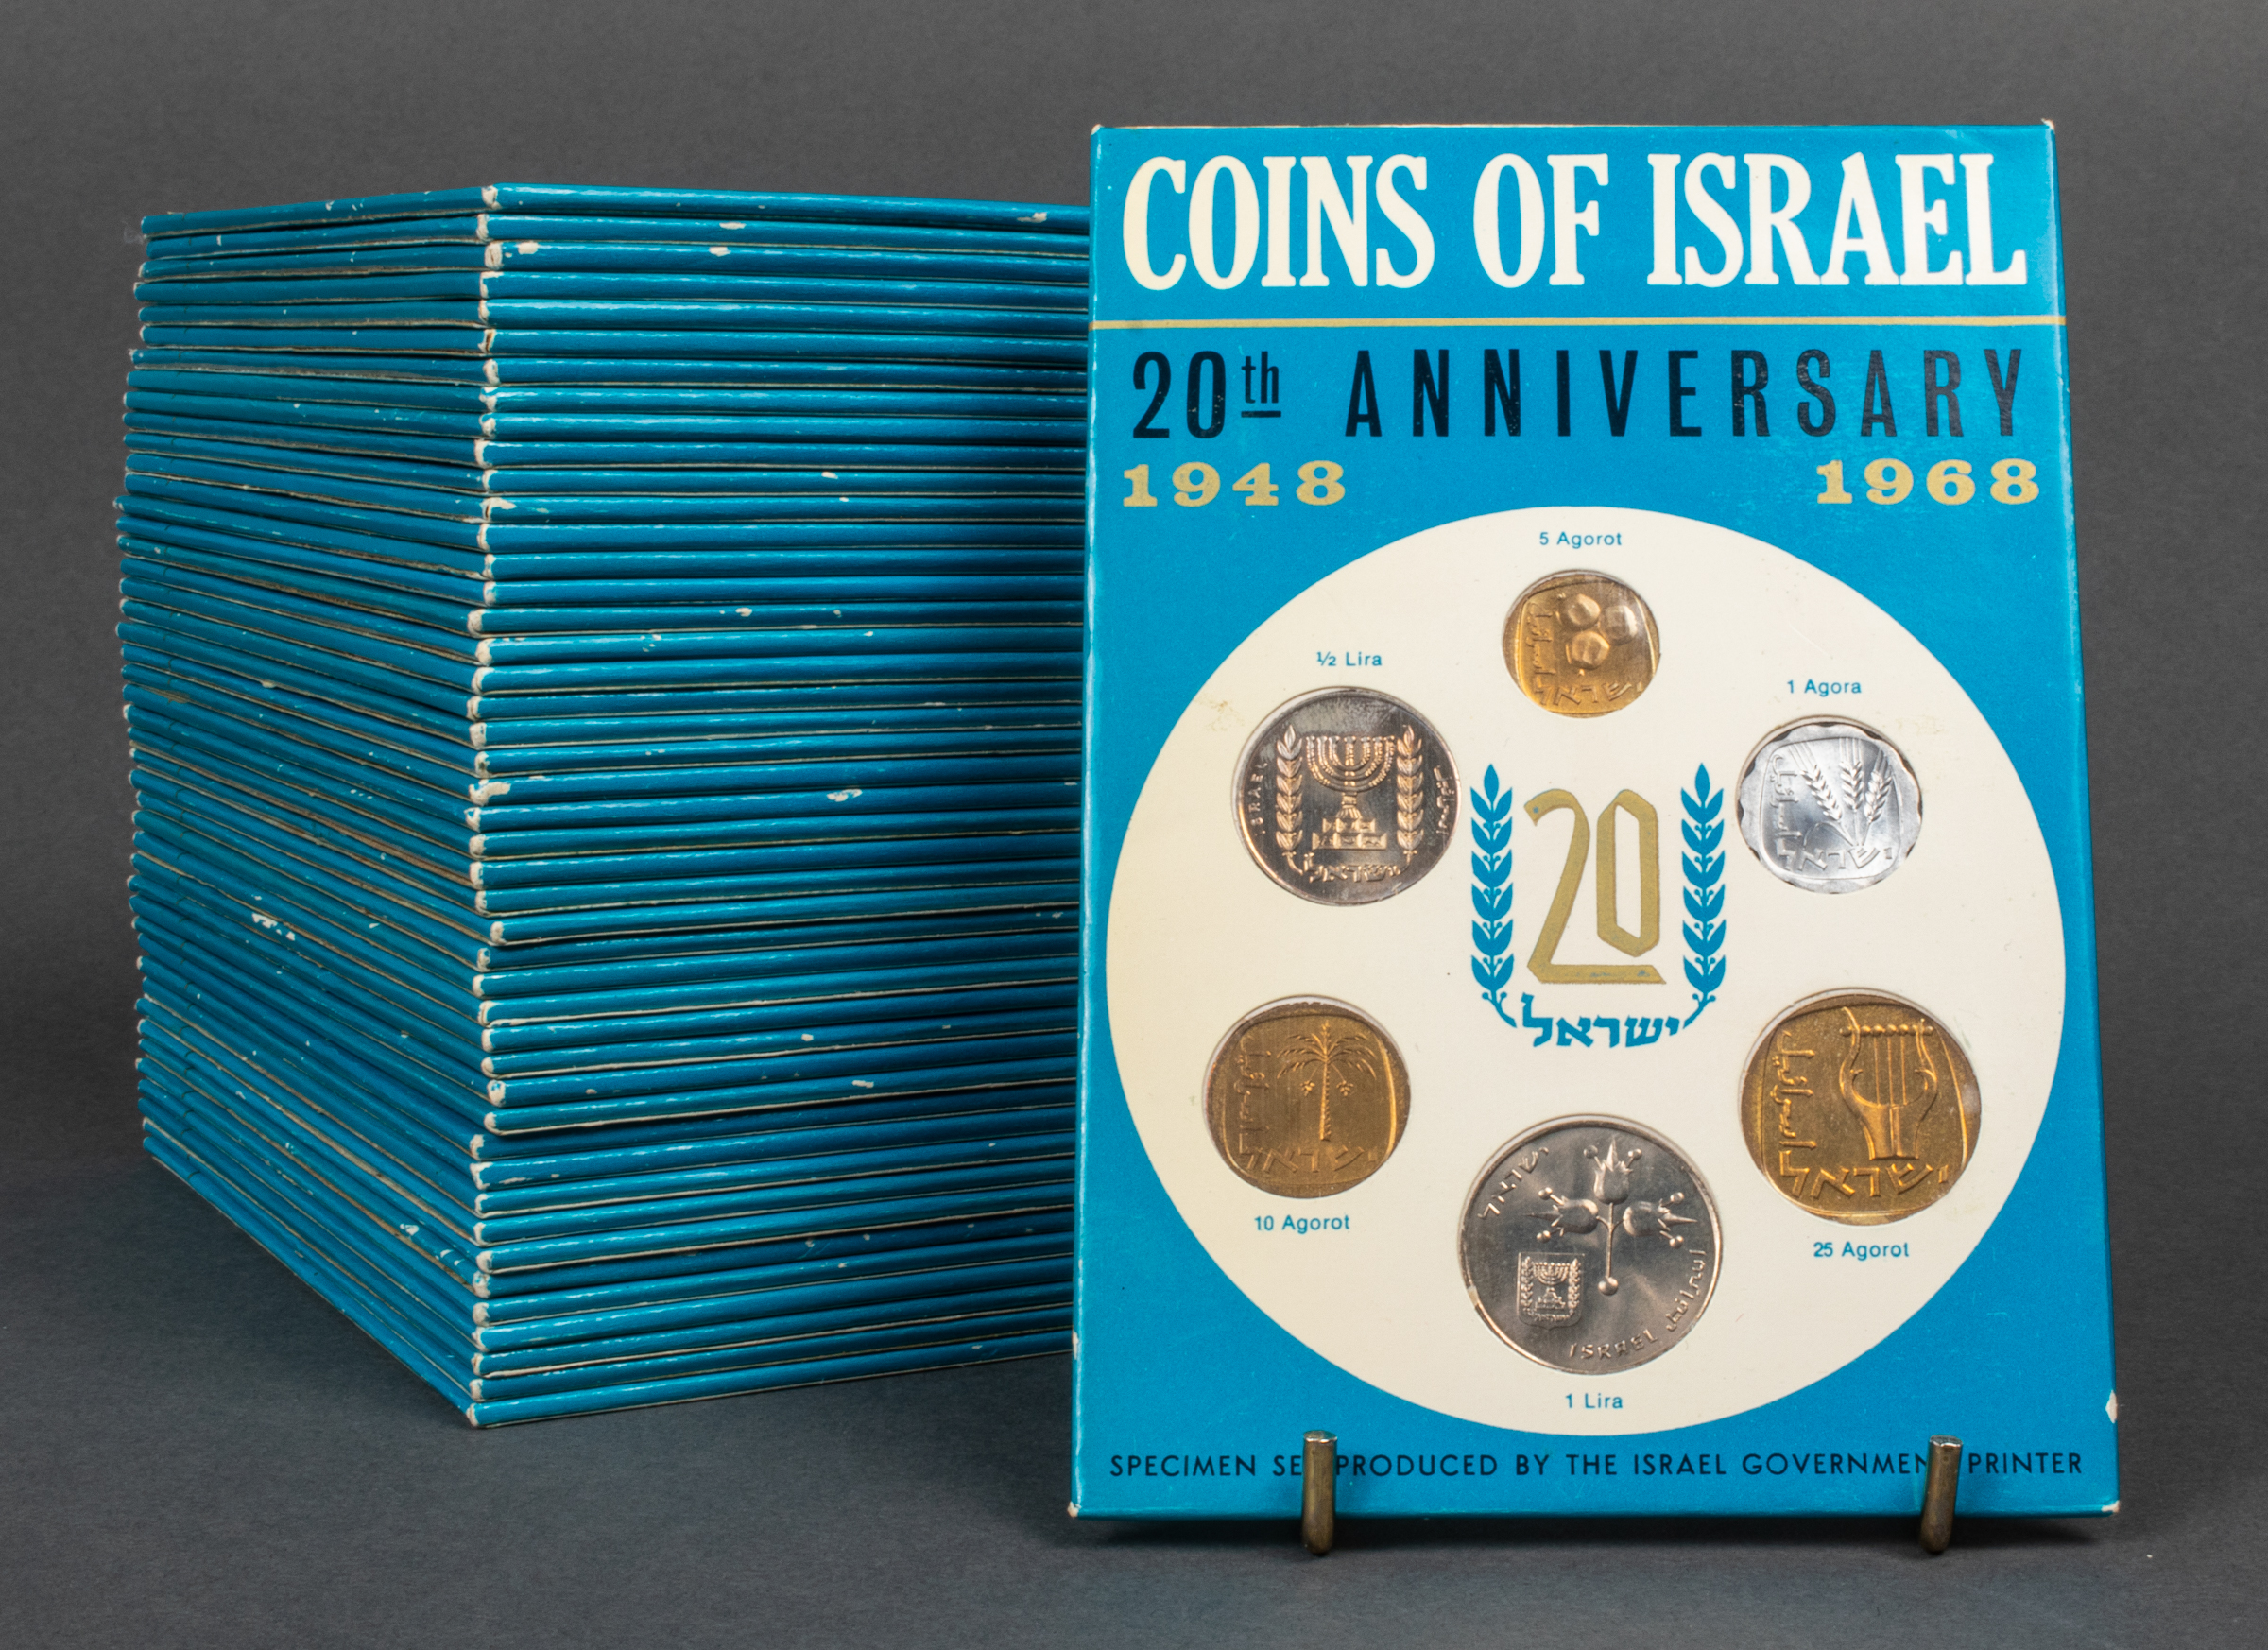 COINS OF ISRAEL 20TH ANNIVERSARY 3c3b23